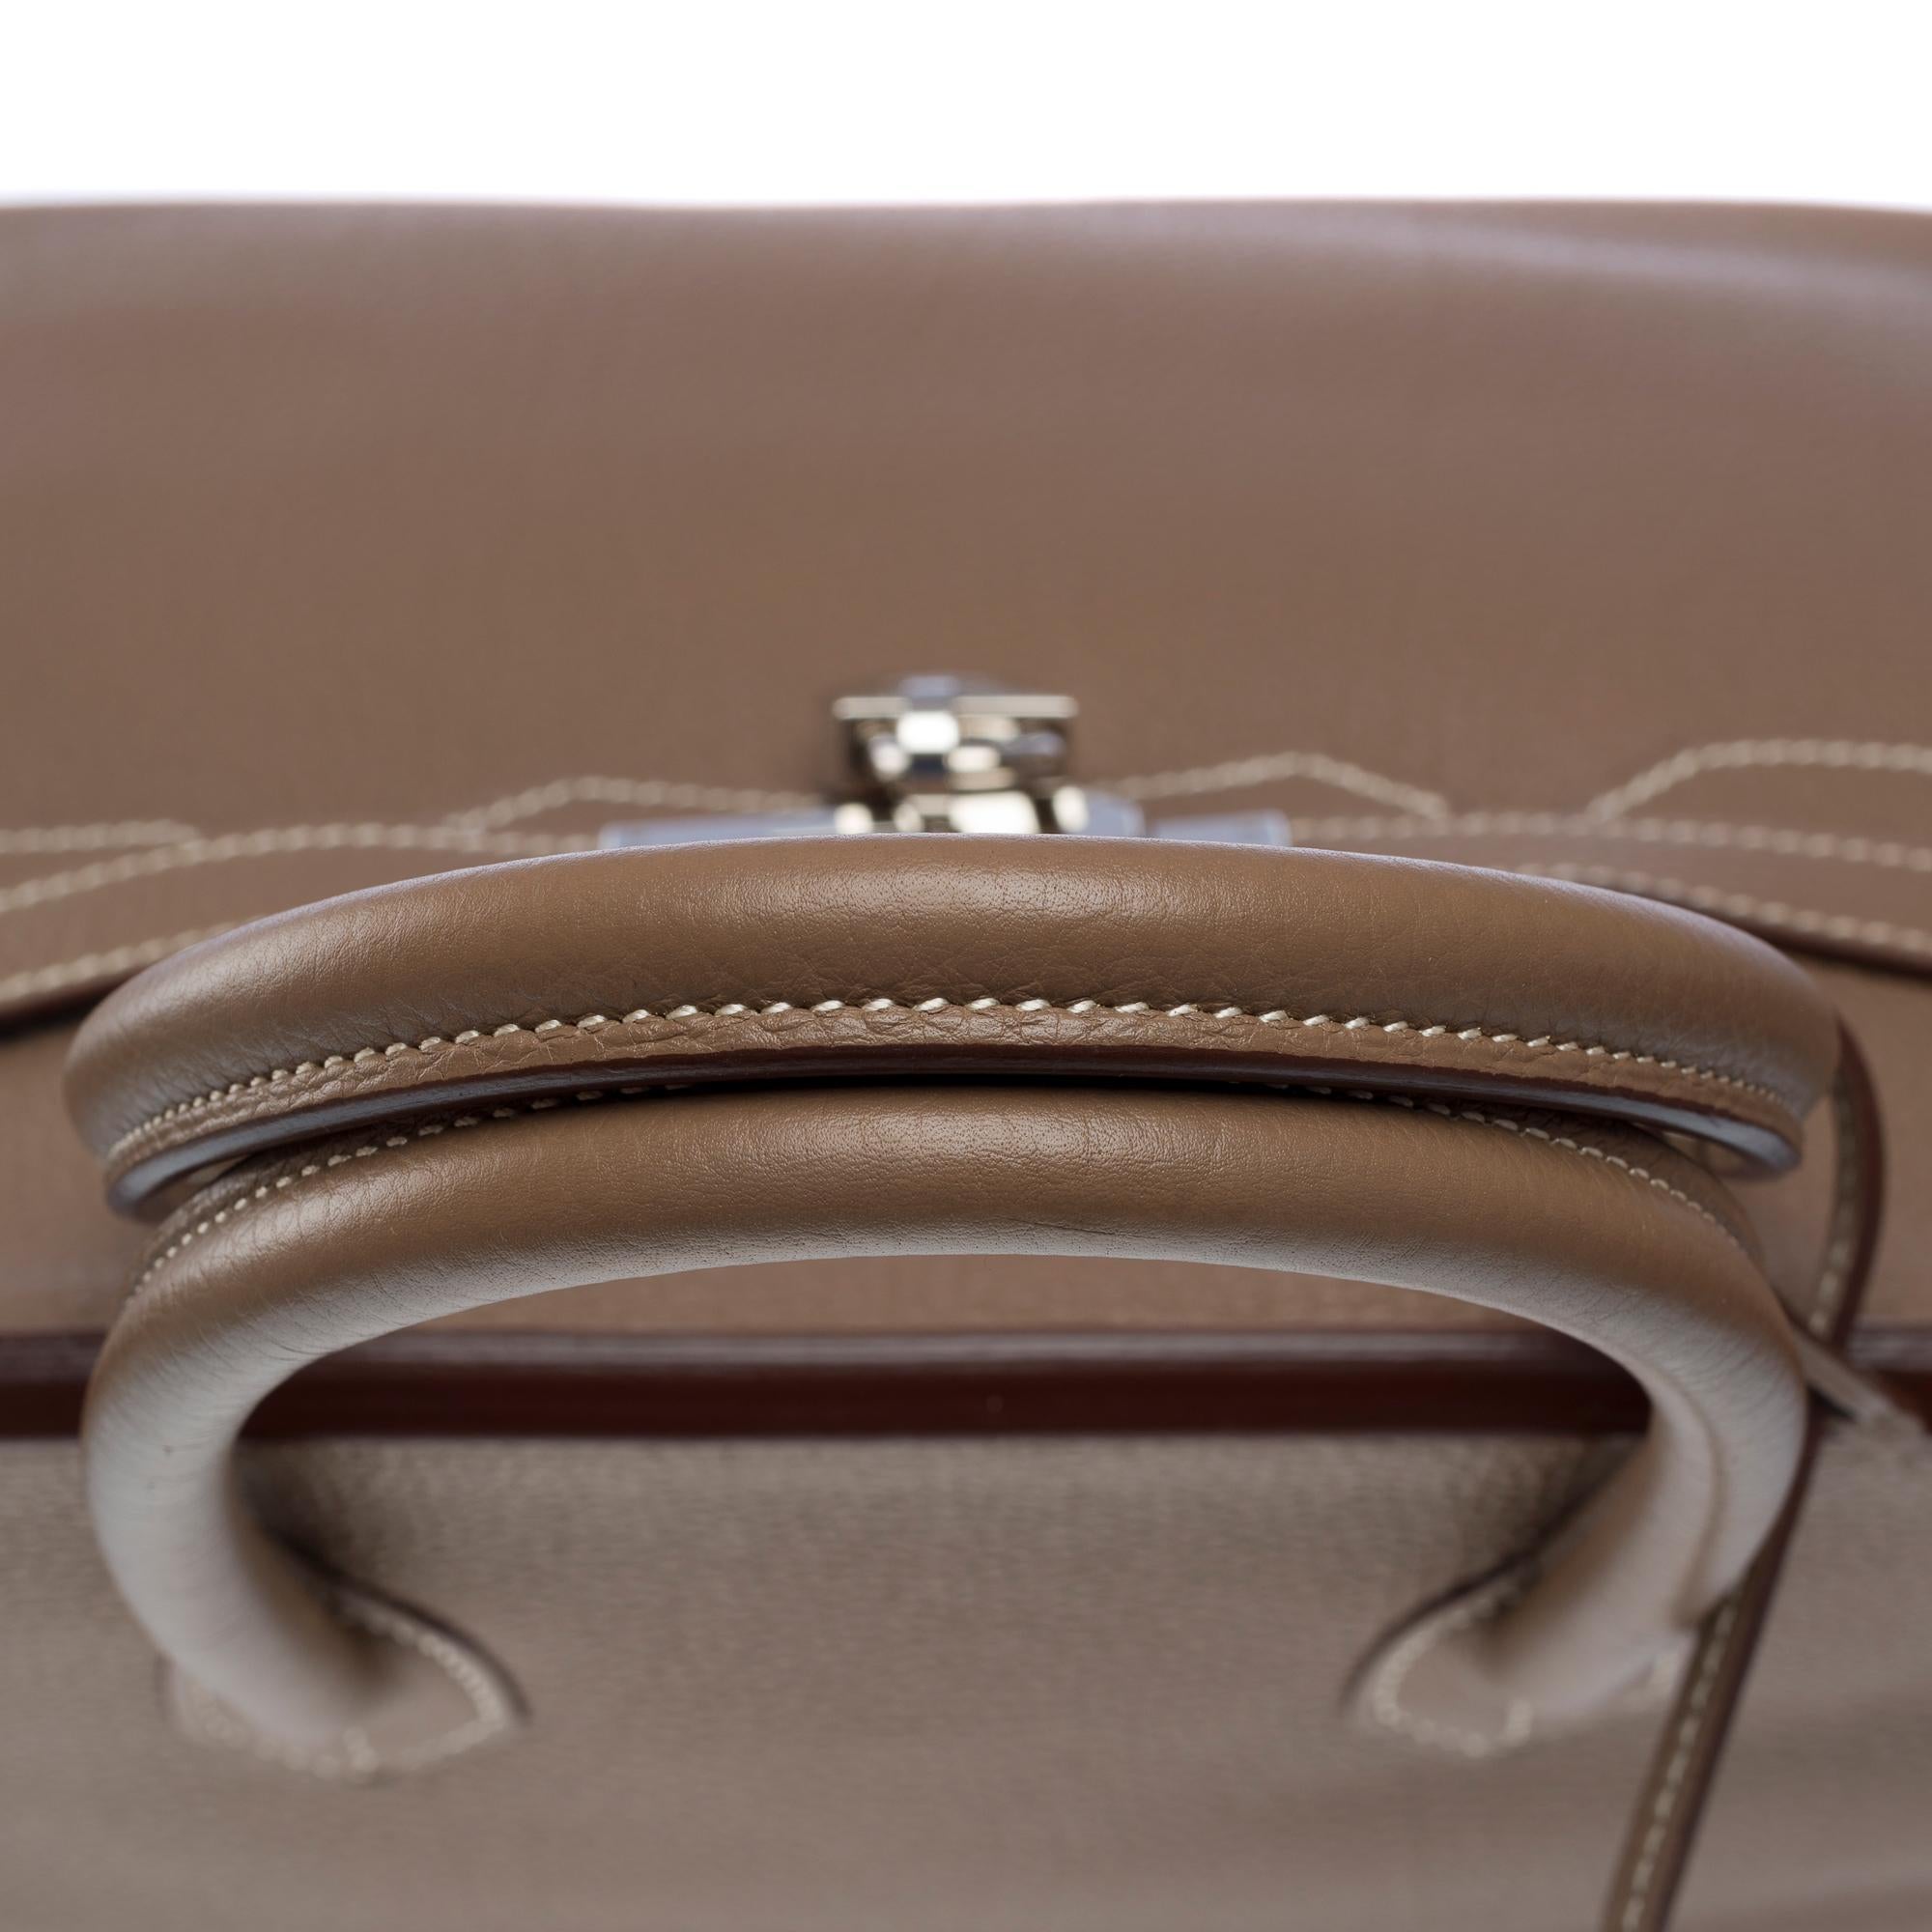 Stunning Hermès Birkin 35 handbag in etoupe Togo leather, SHW 7